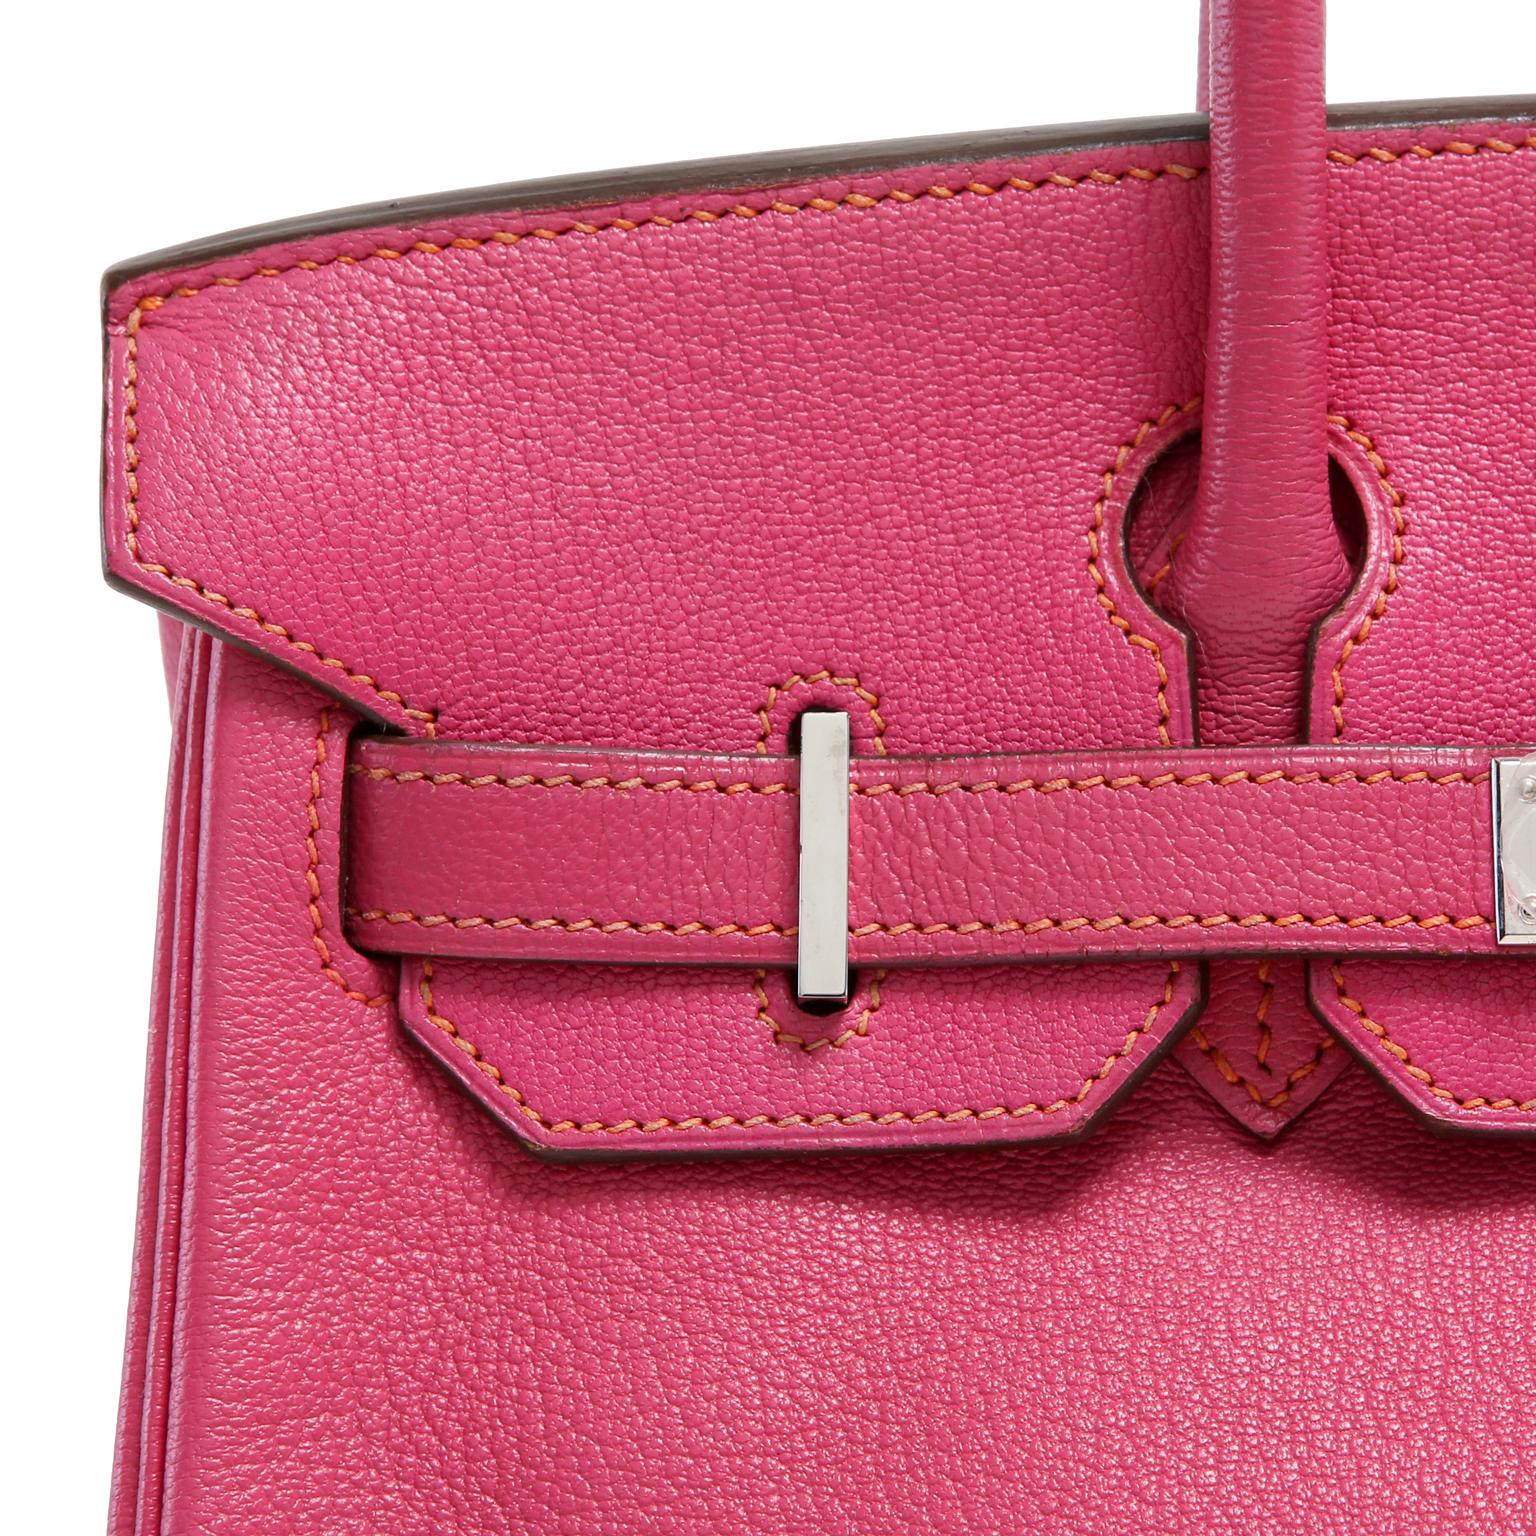 Hermès Rose Shocking Chevre Leather 30 cm Birkin Bag 10